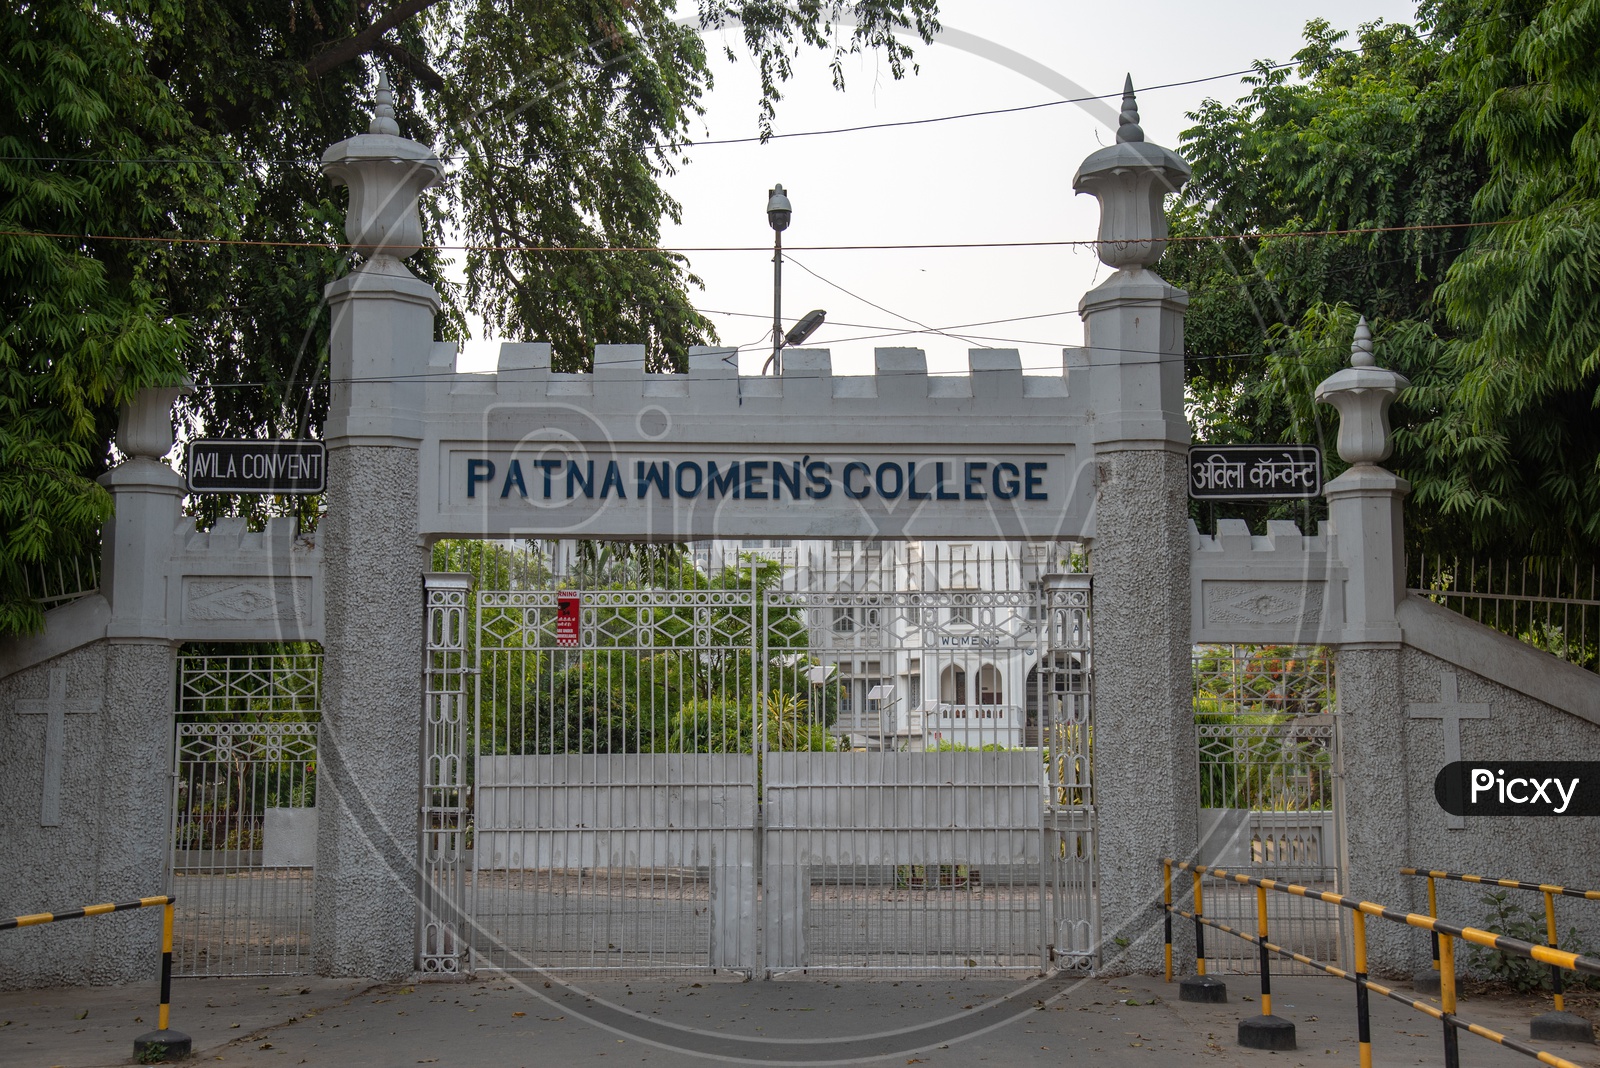 Patna Women's College or Avila Convent  , Patna City